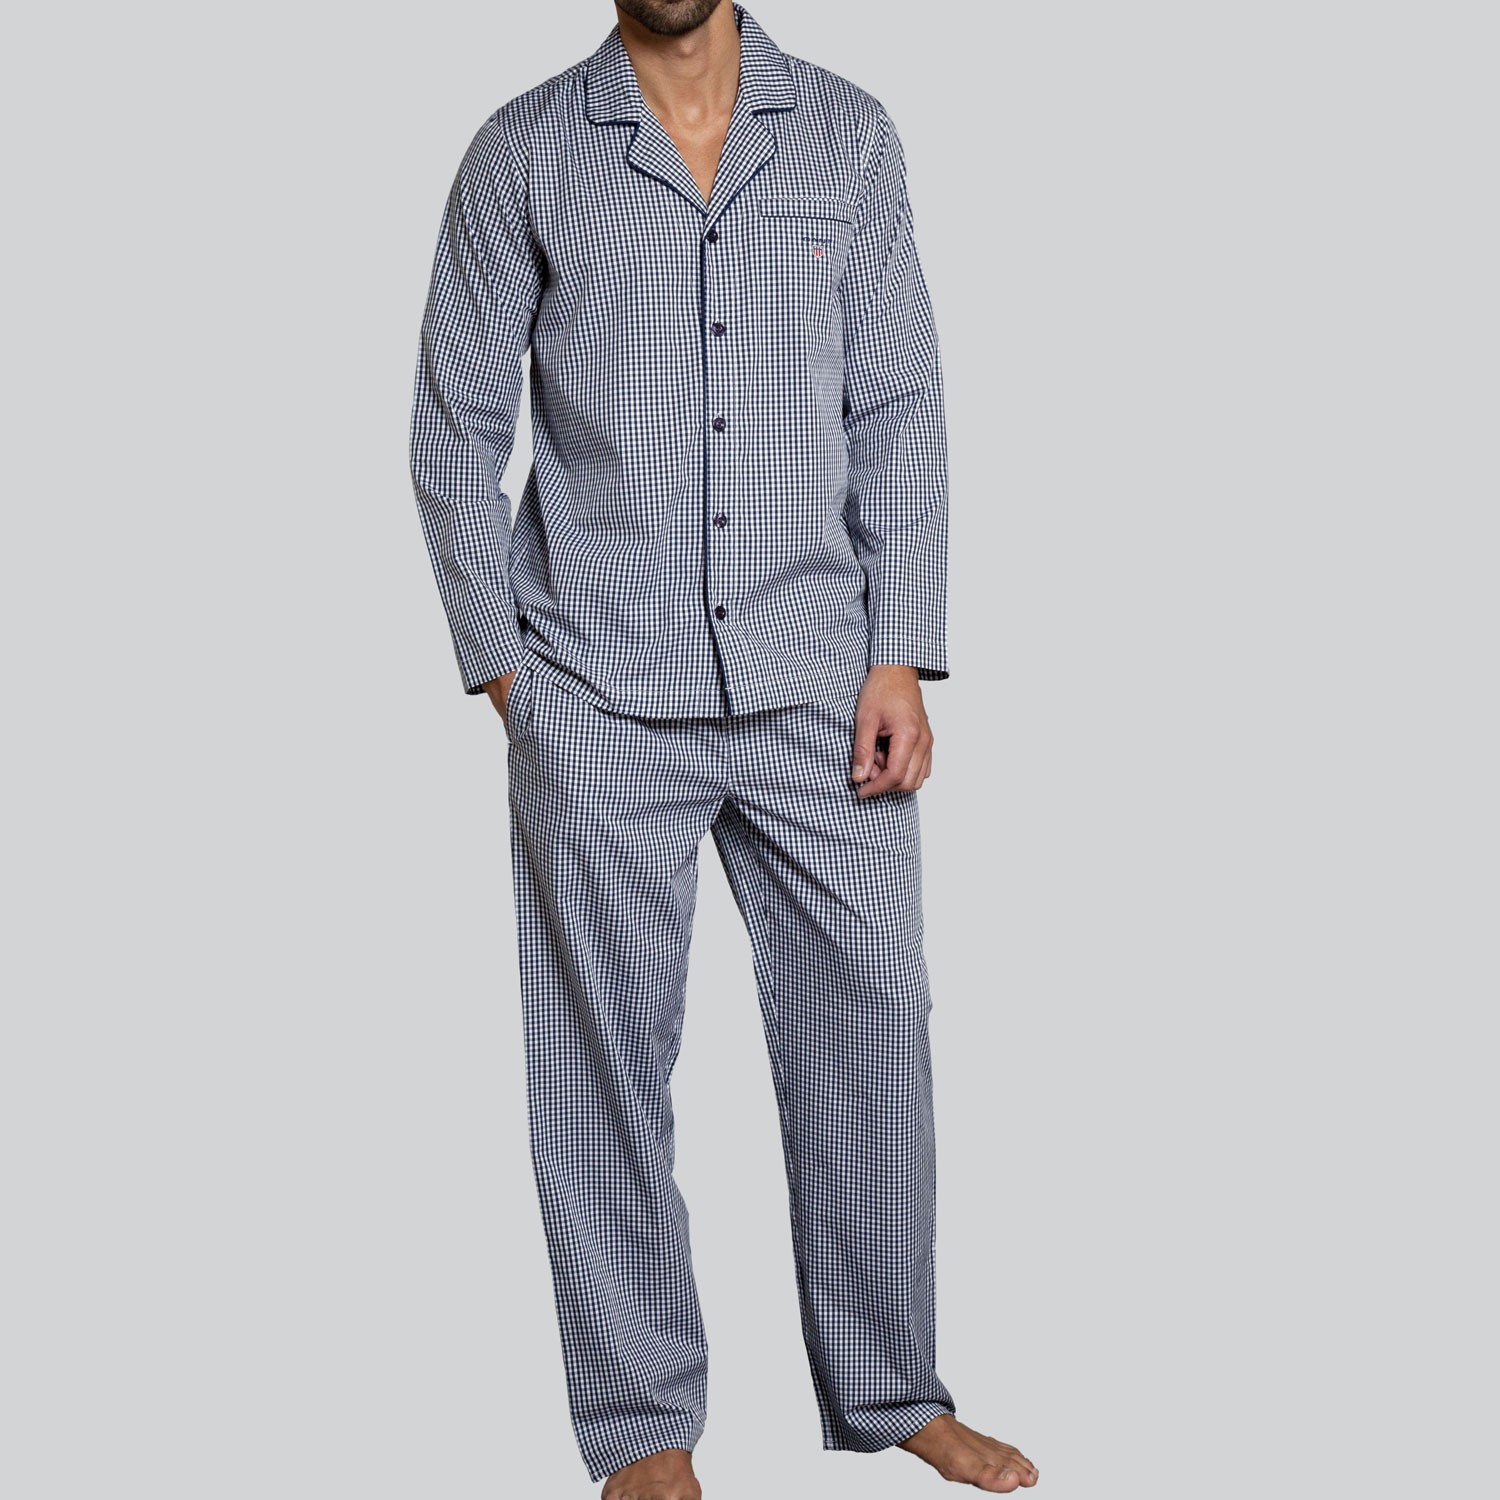 Gant Pyjama Set Gingham